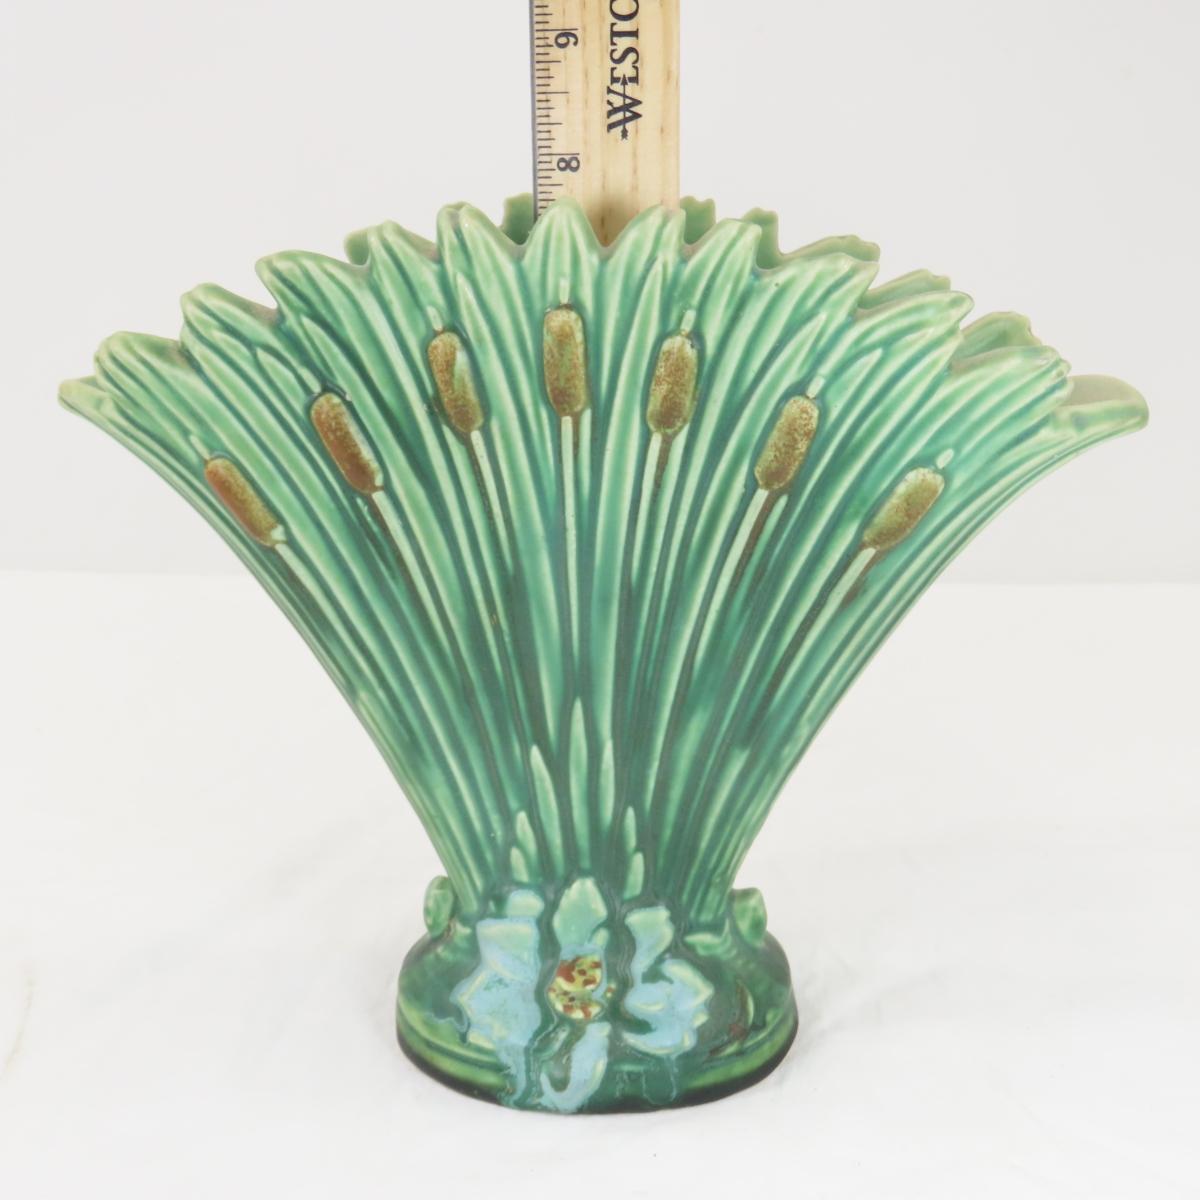 1928 Weller Pottery Ardsley Cat Tail Fan Vase